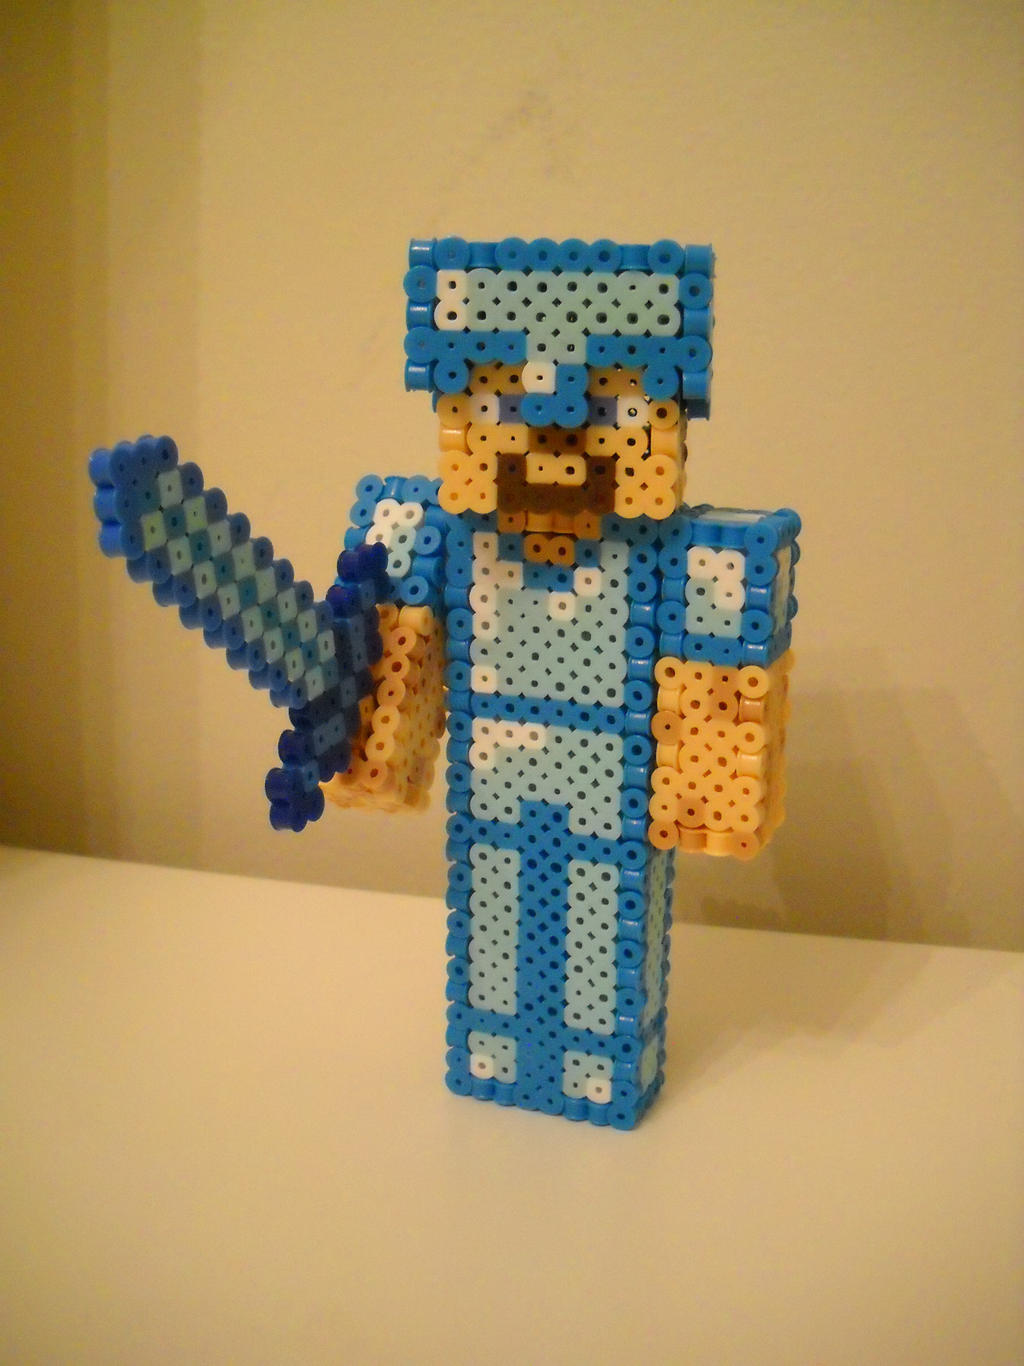 Minecraft Diamond Armor Steve